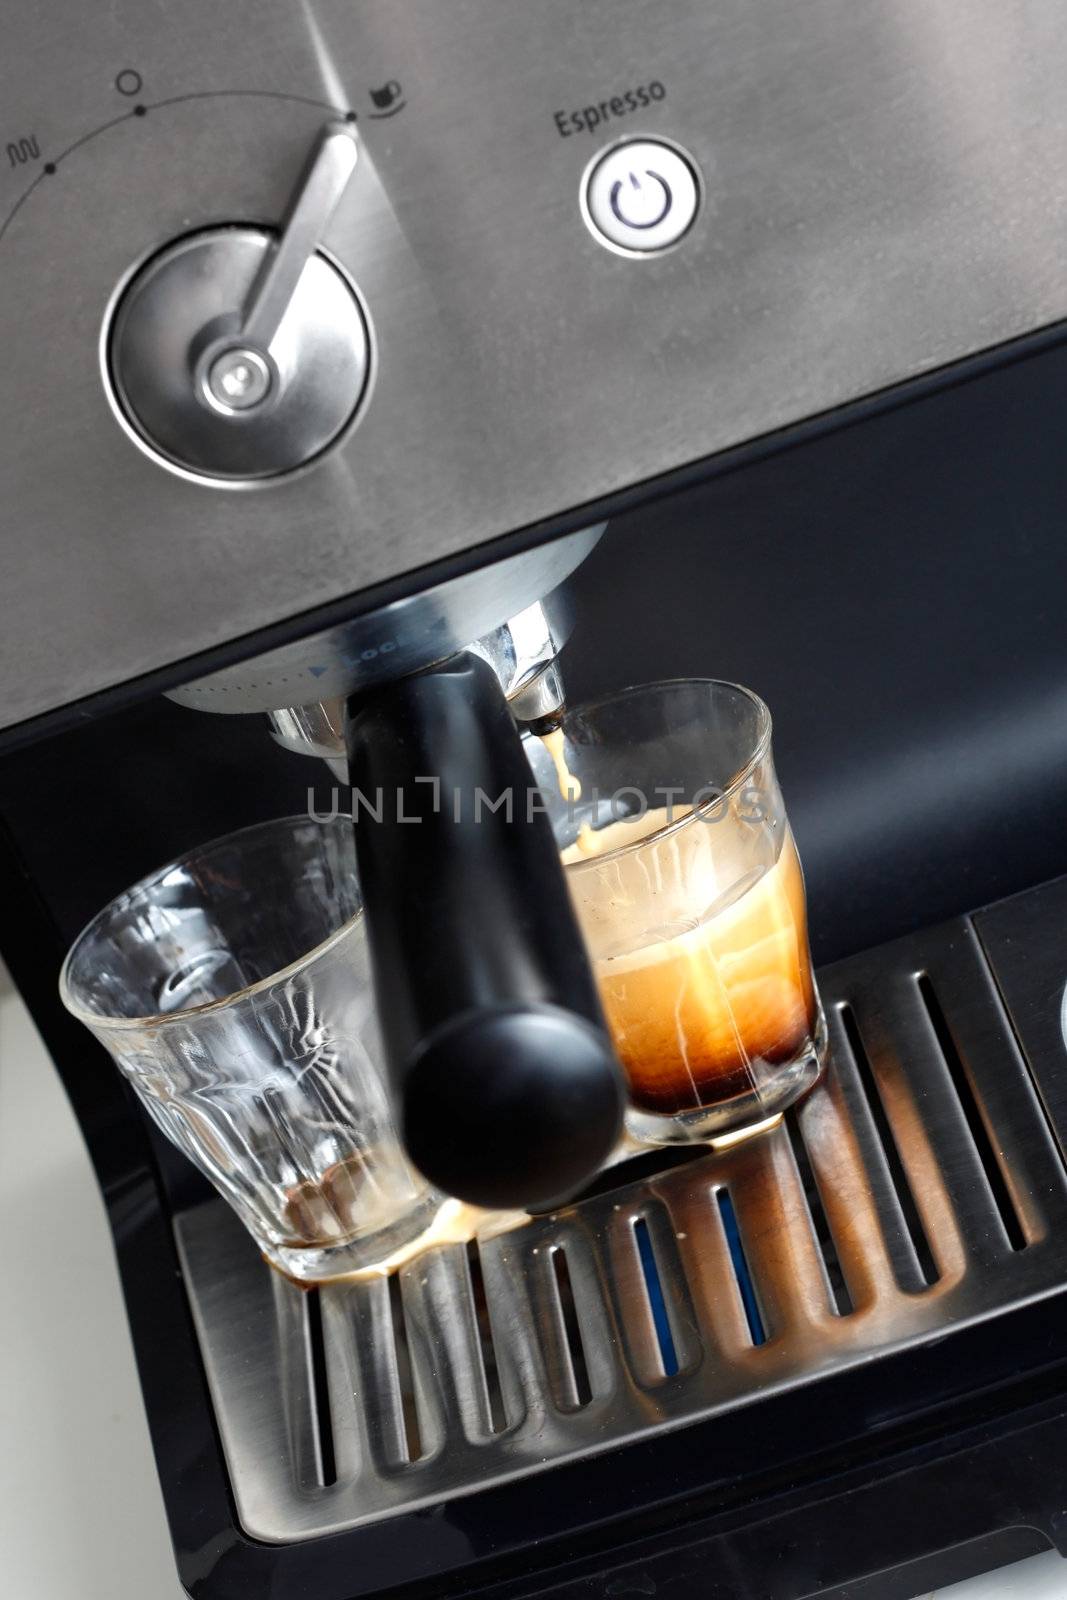 Espresso machine brewing a coffee espresso